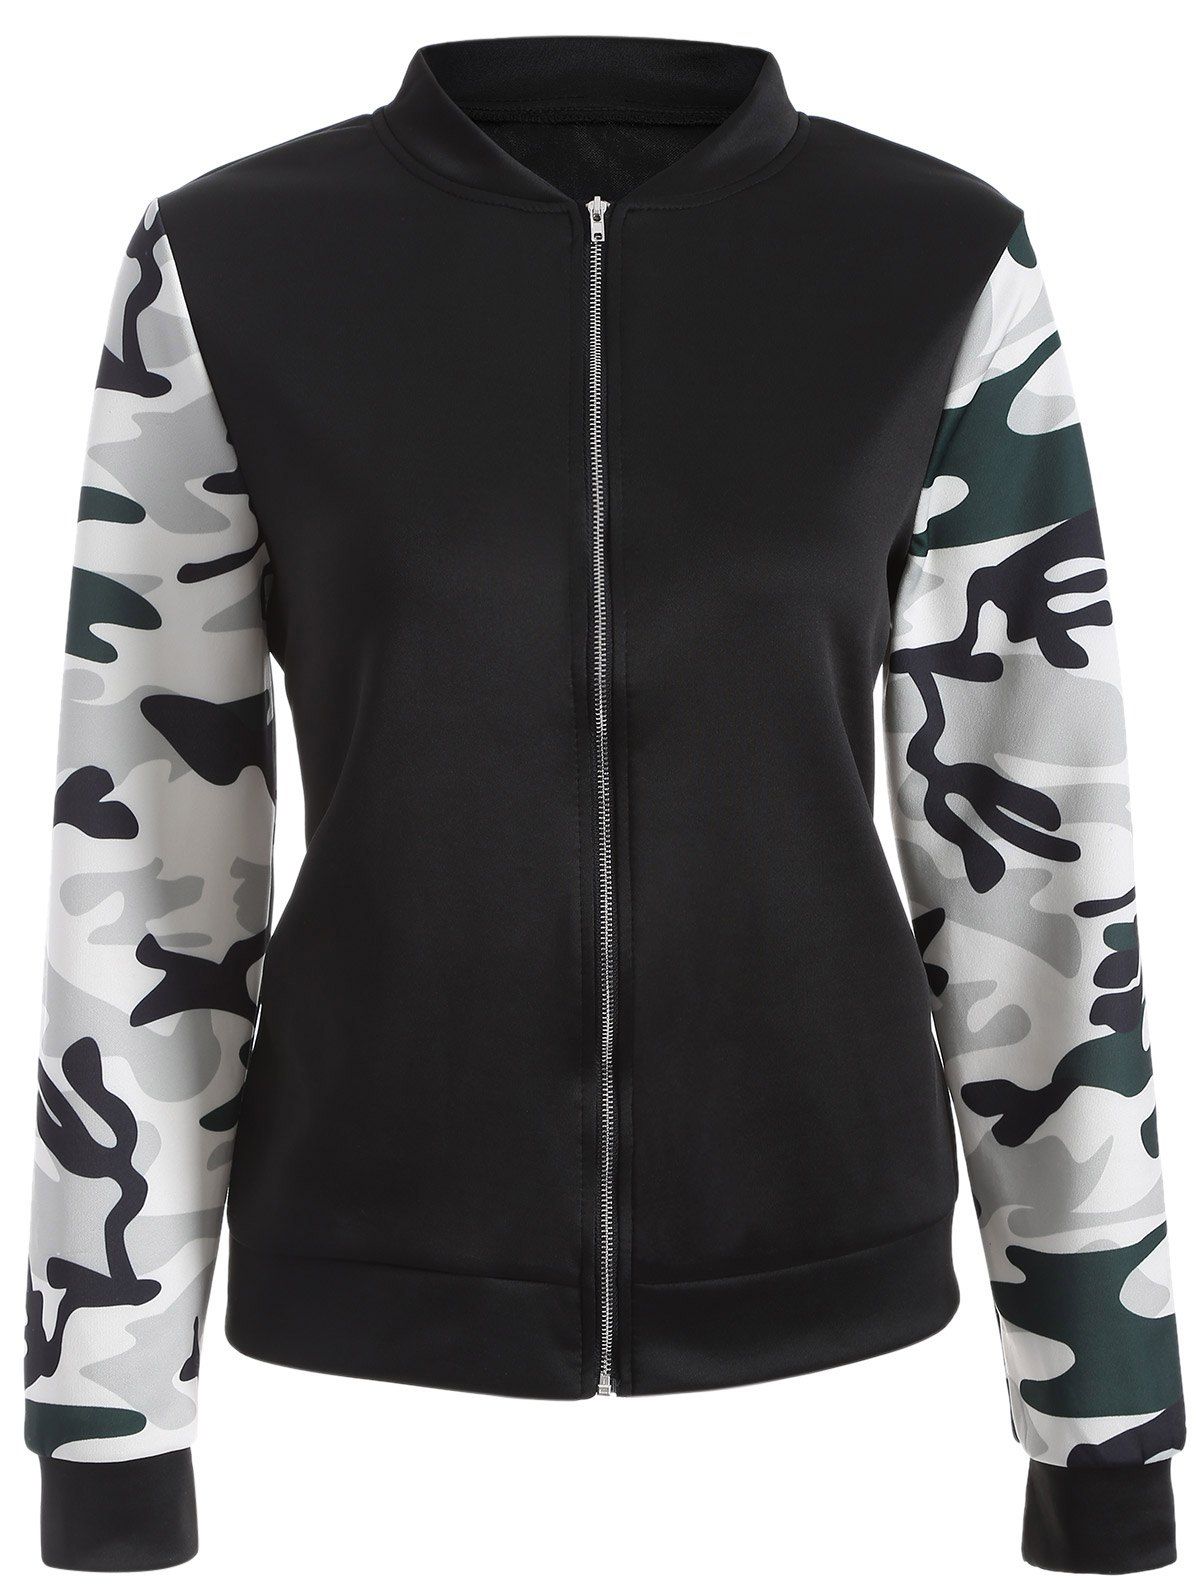 [17% OFF] 2021 Zip Up Camouflage Print Jacket In BLACK | DressLily